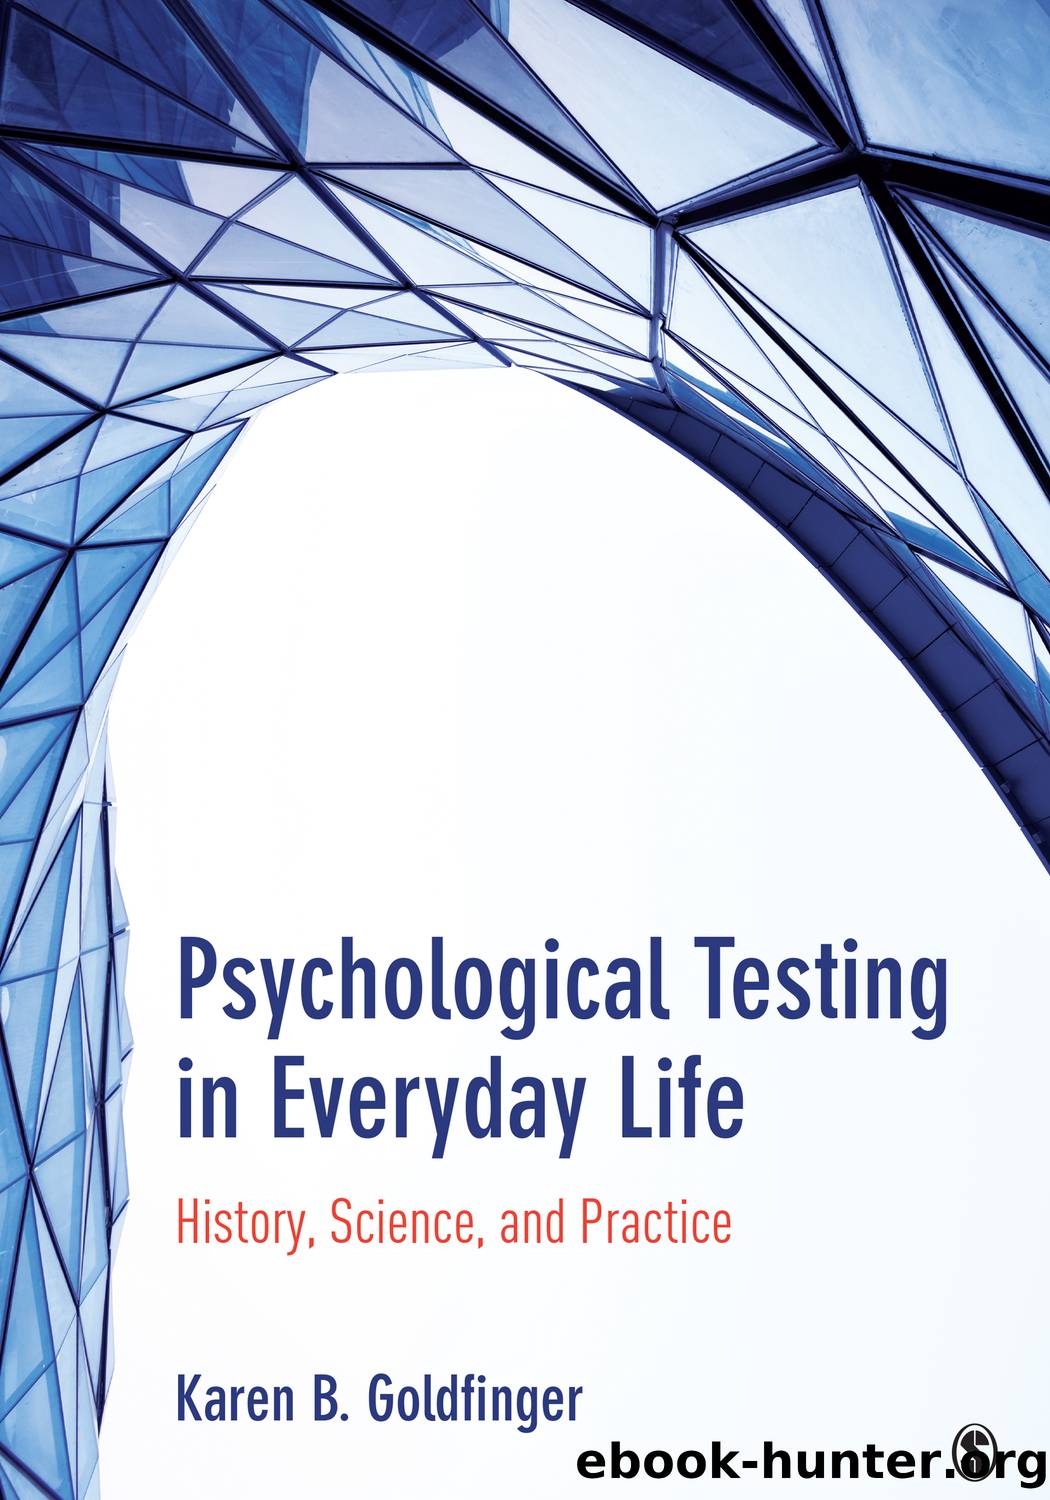 Psychological Testing in Everyday Life by karen b. goldfinger karen b. (beth) goldfinger